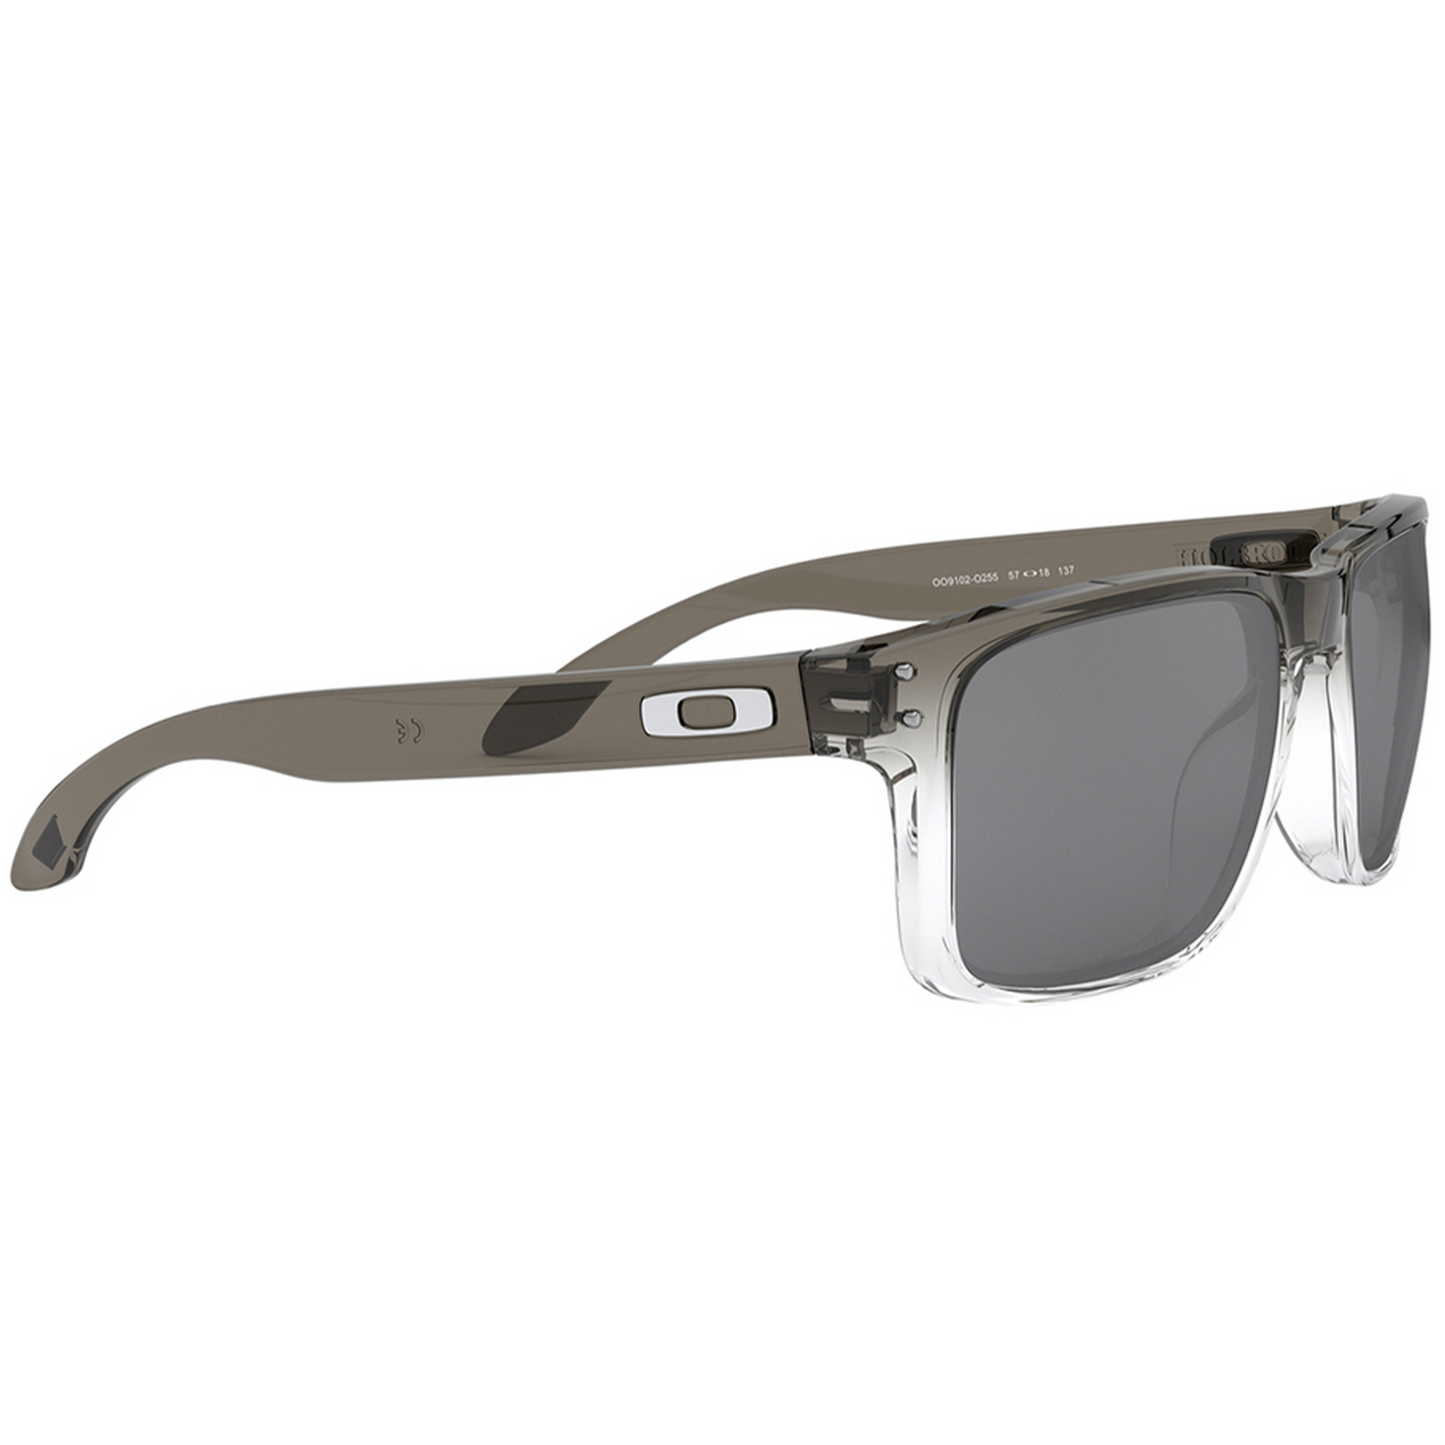 Oakley Holbrook Sunglasses (Dark Ink Fade) Prizm Black Polarized Lens - Free Case